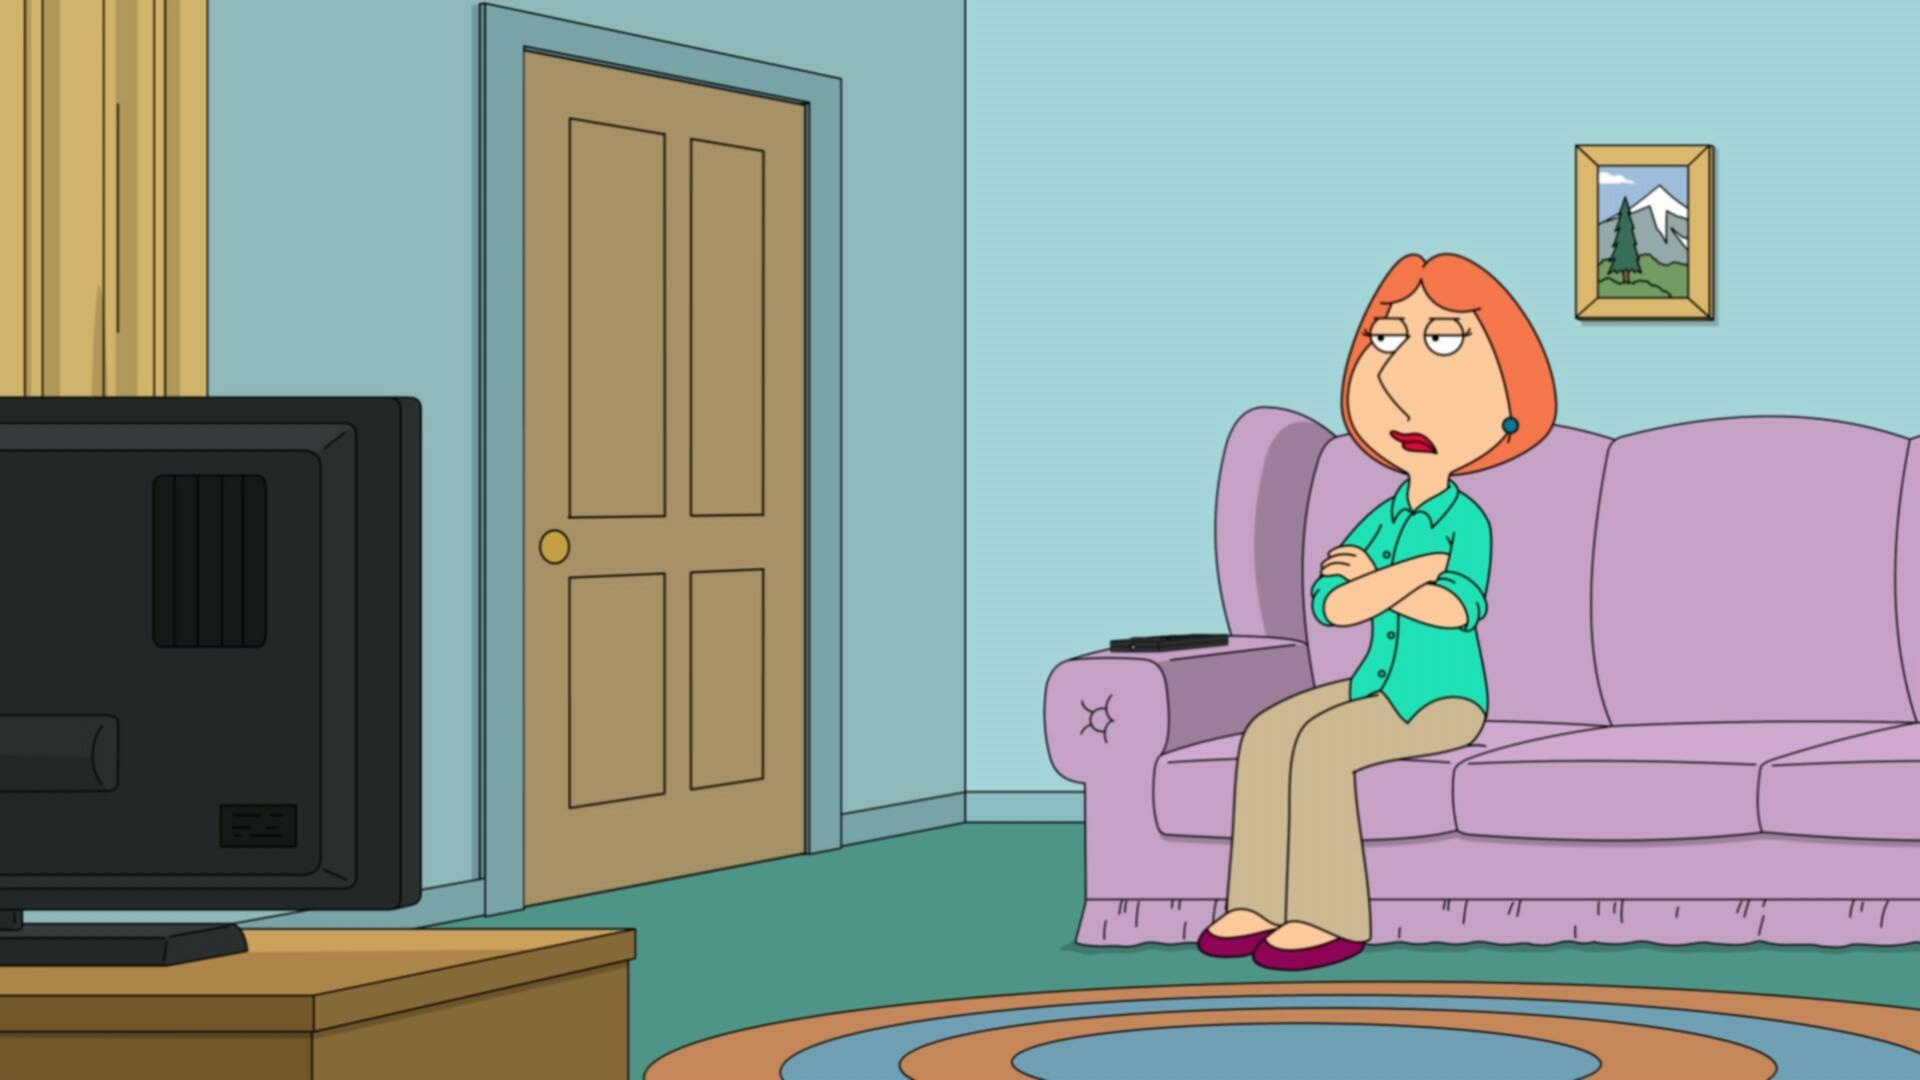 Family Guy S22E08 1080p WEB h264 BAE TGx